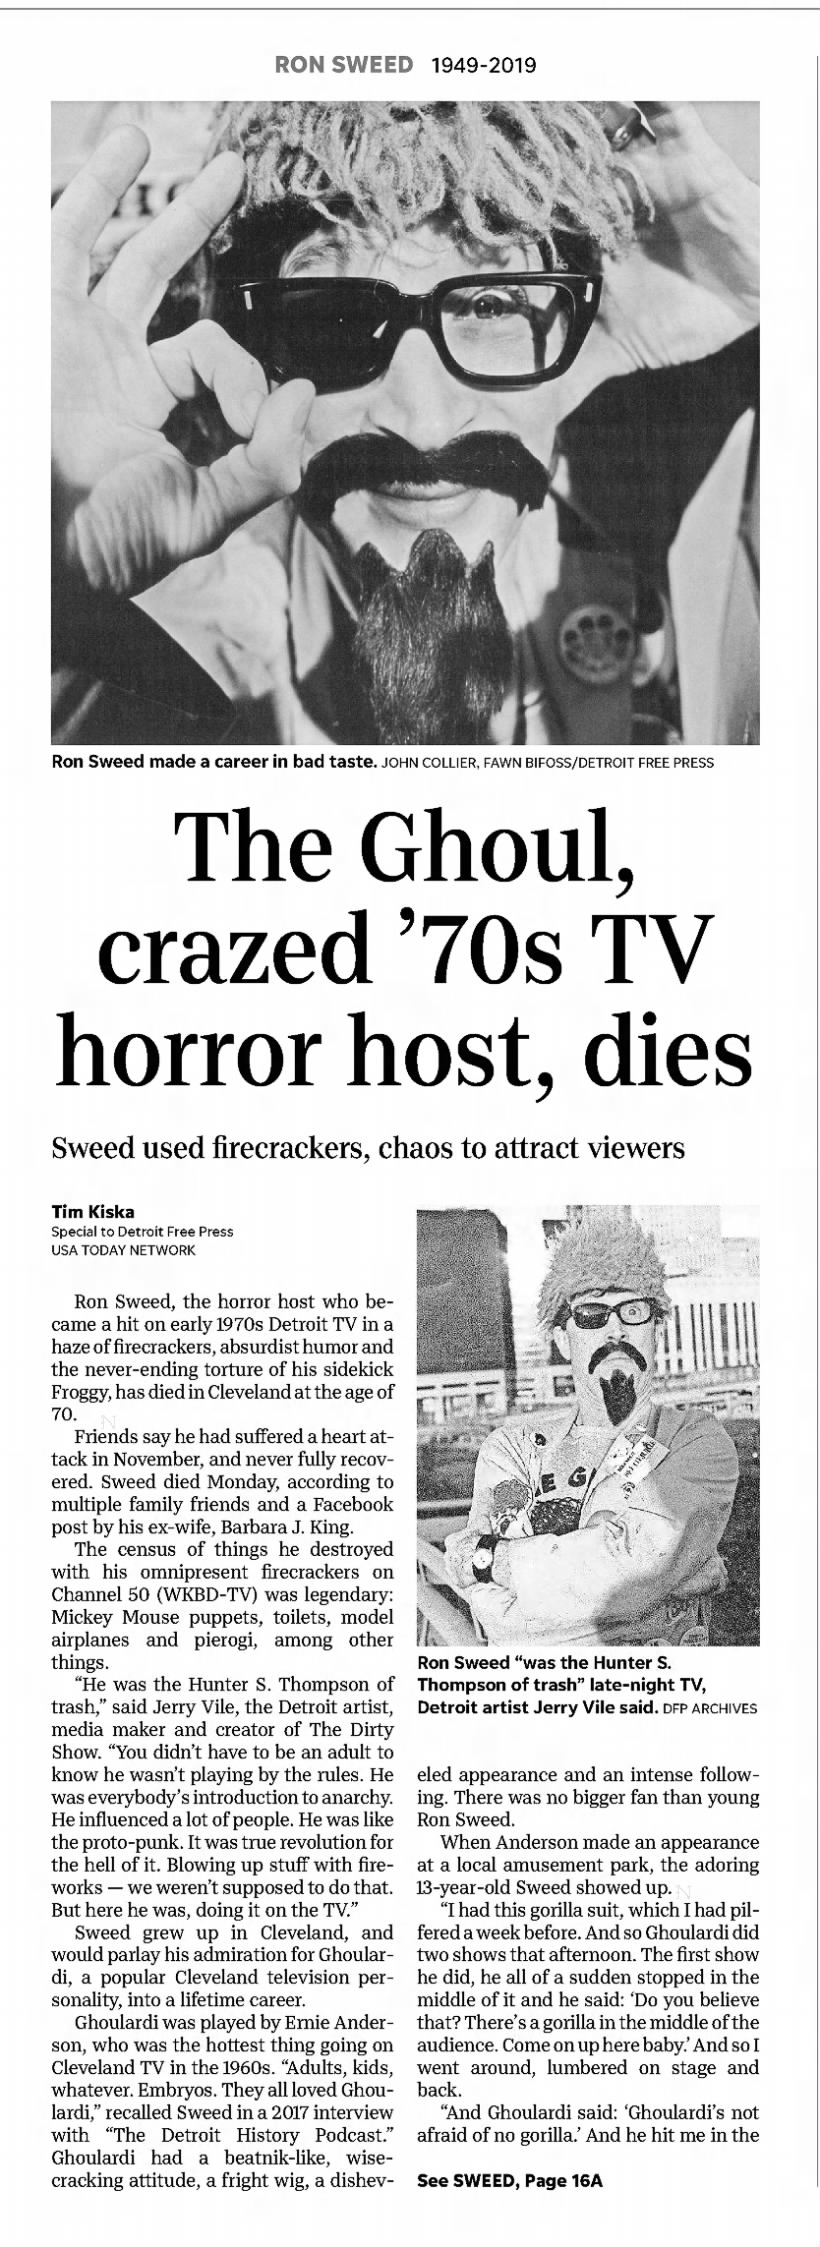 The Ghoul, crazed '70s TV horror host, dies